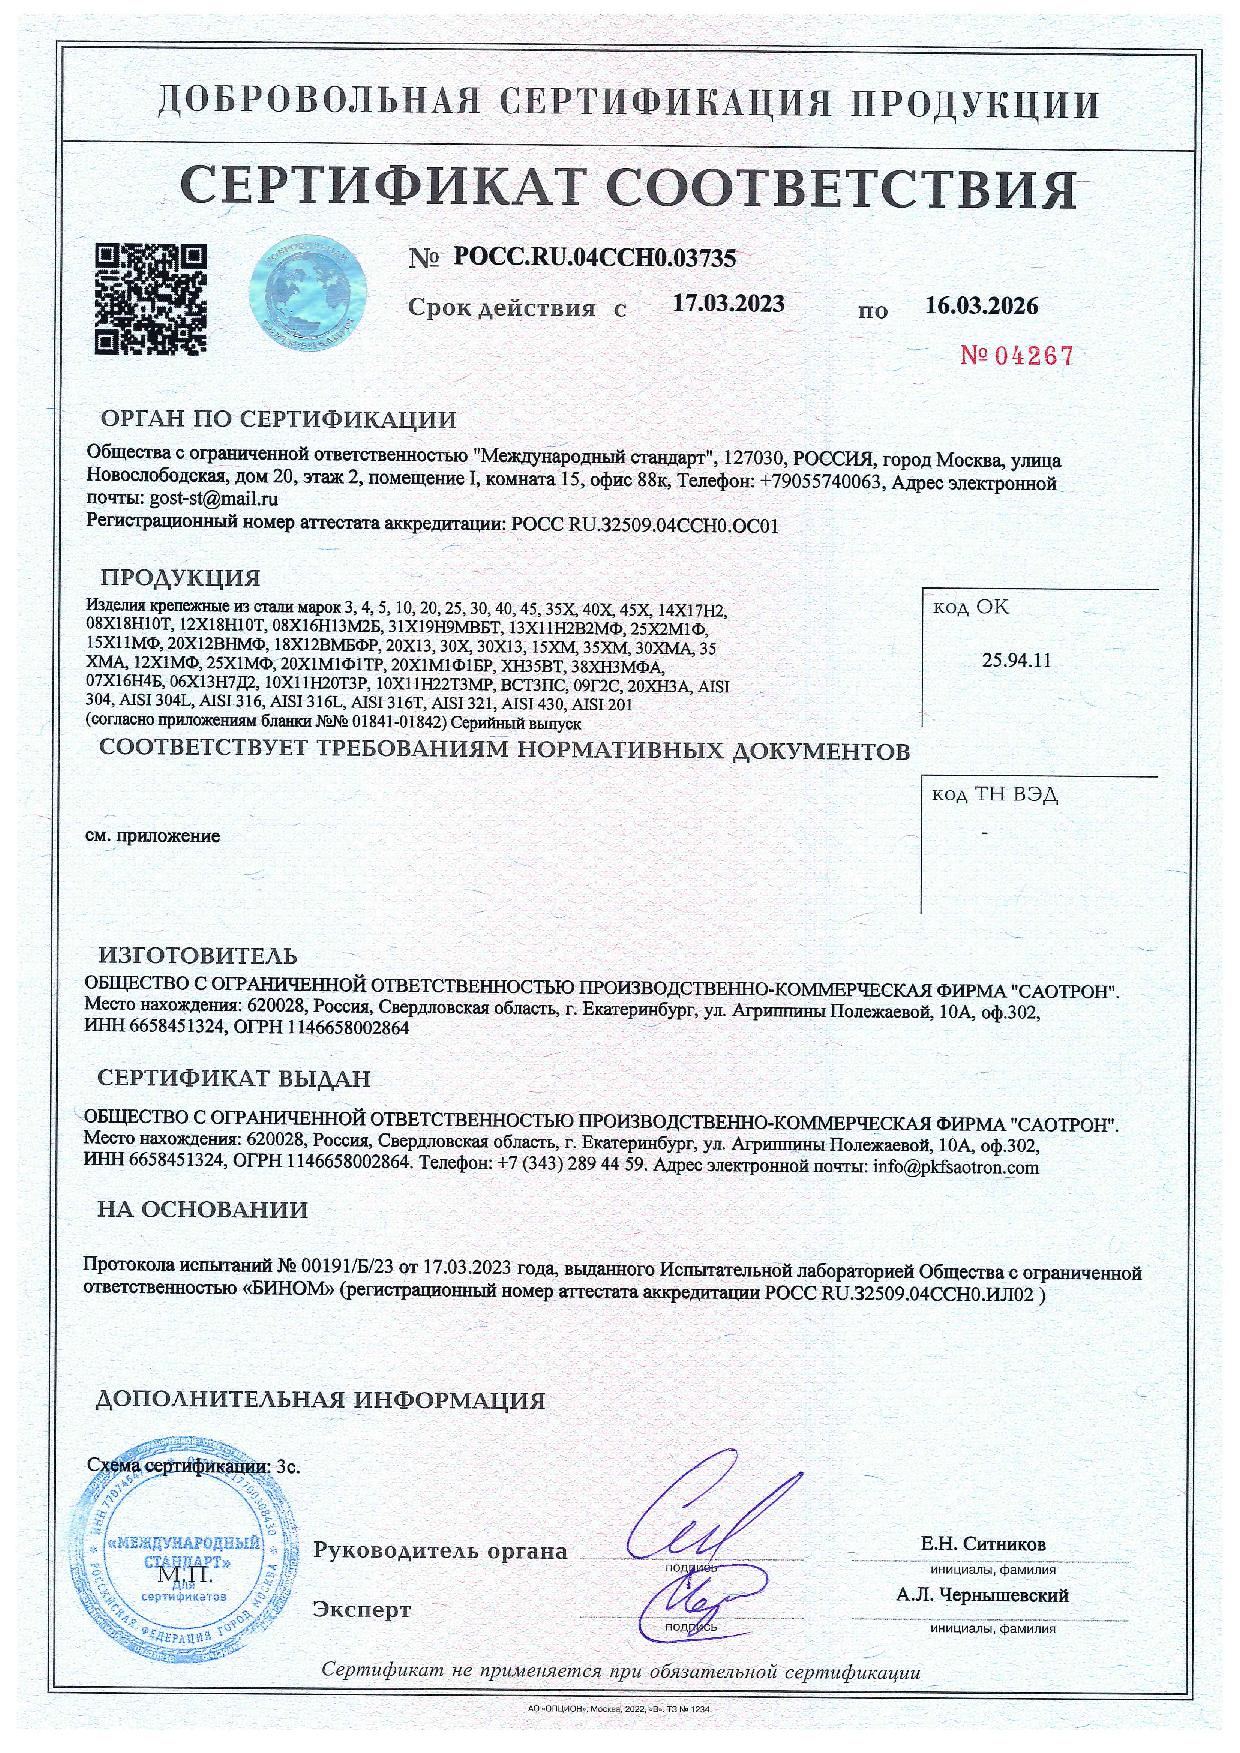 Certificate of Conformity 1